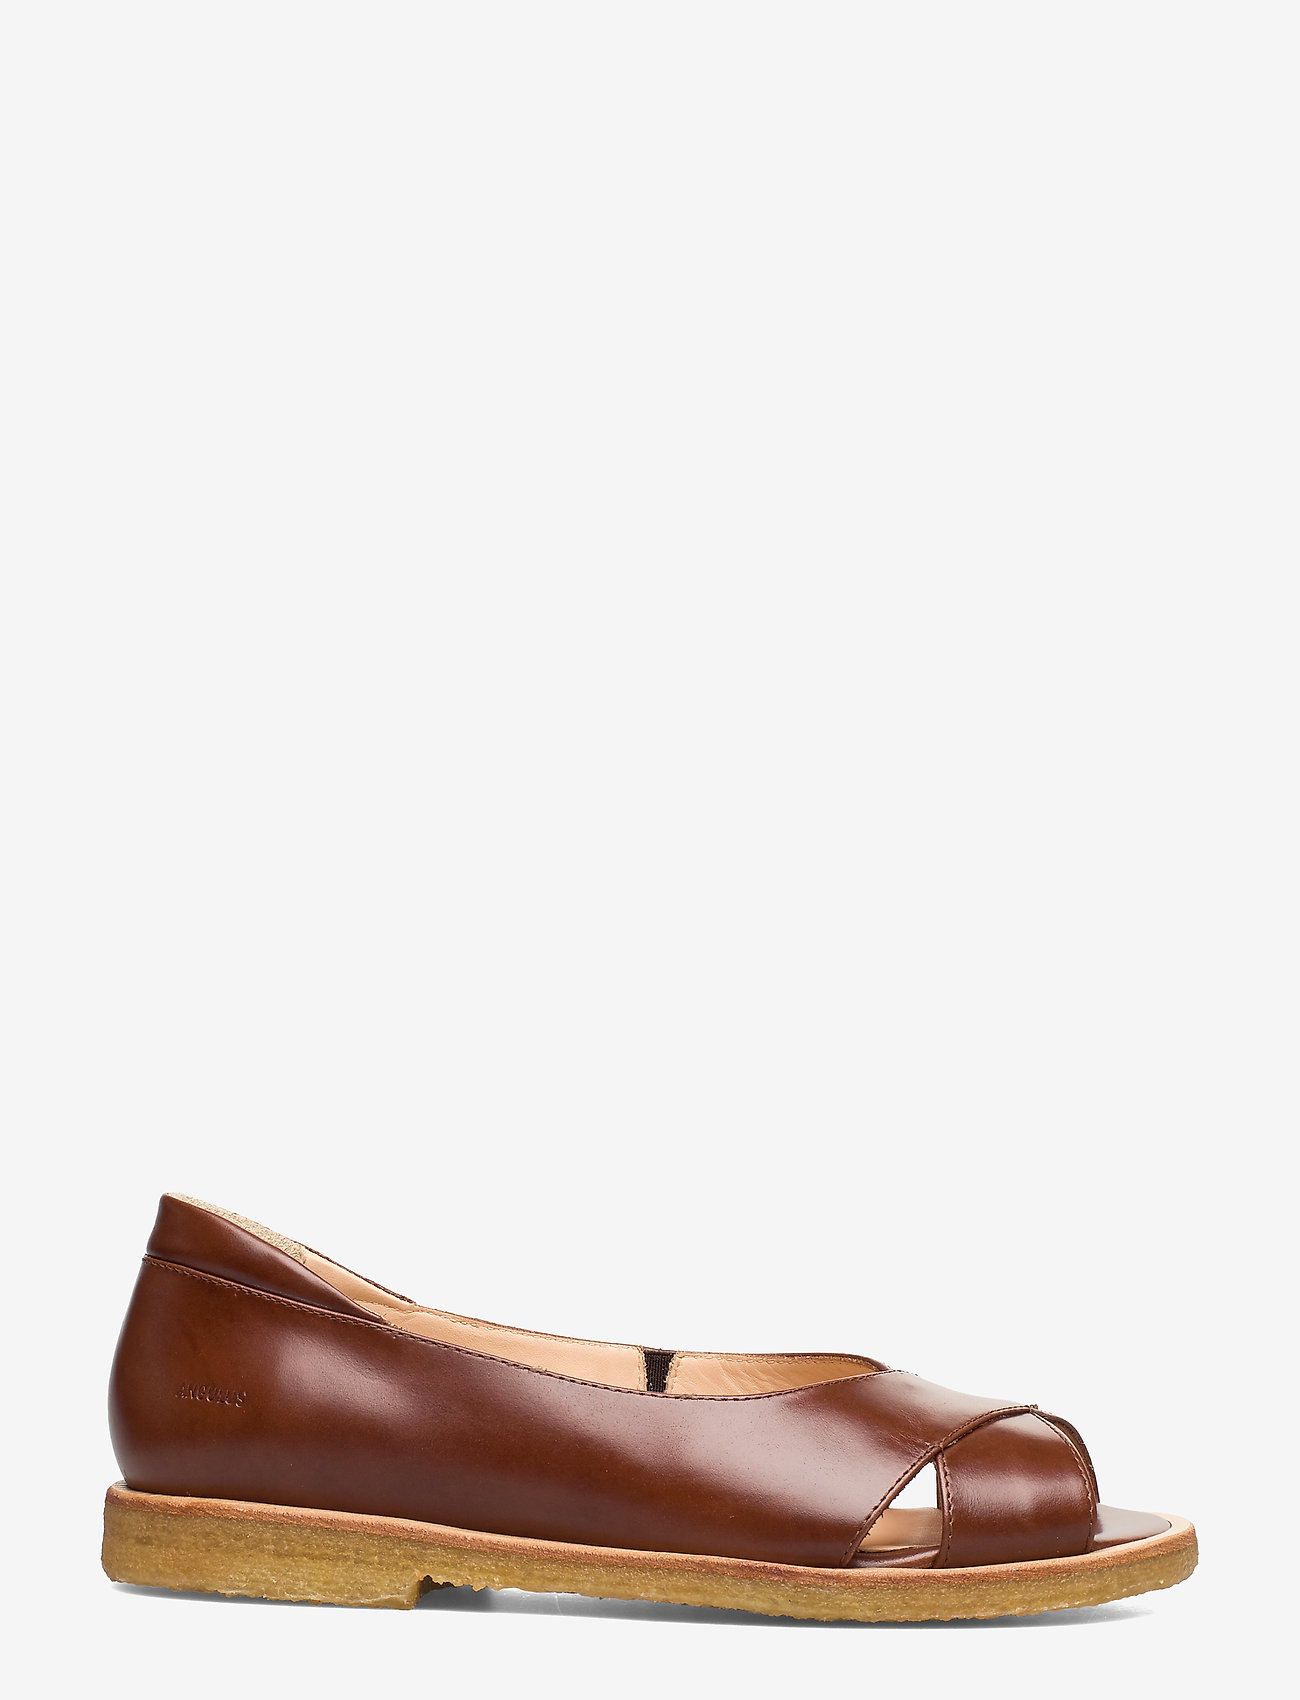 ANGULUS - Sandals - flat - open toe - clo - sandales plates - 1837/002 brown/dark brown - 1